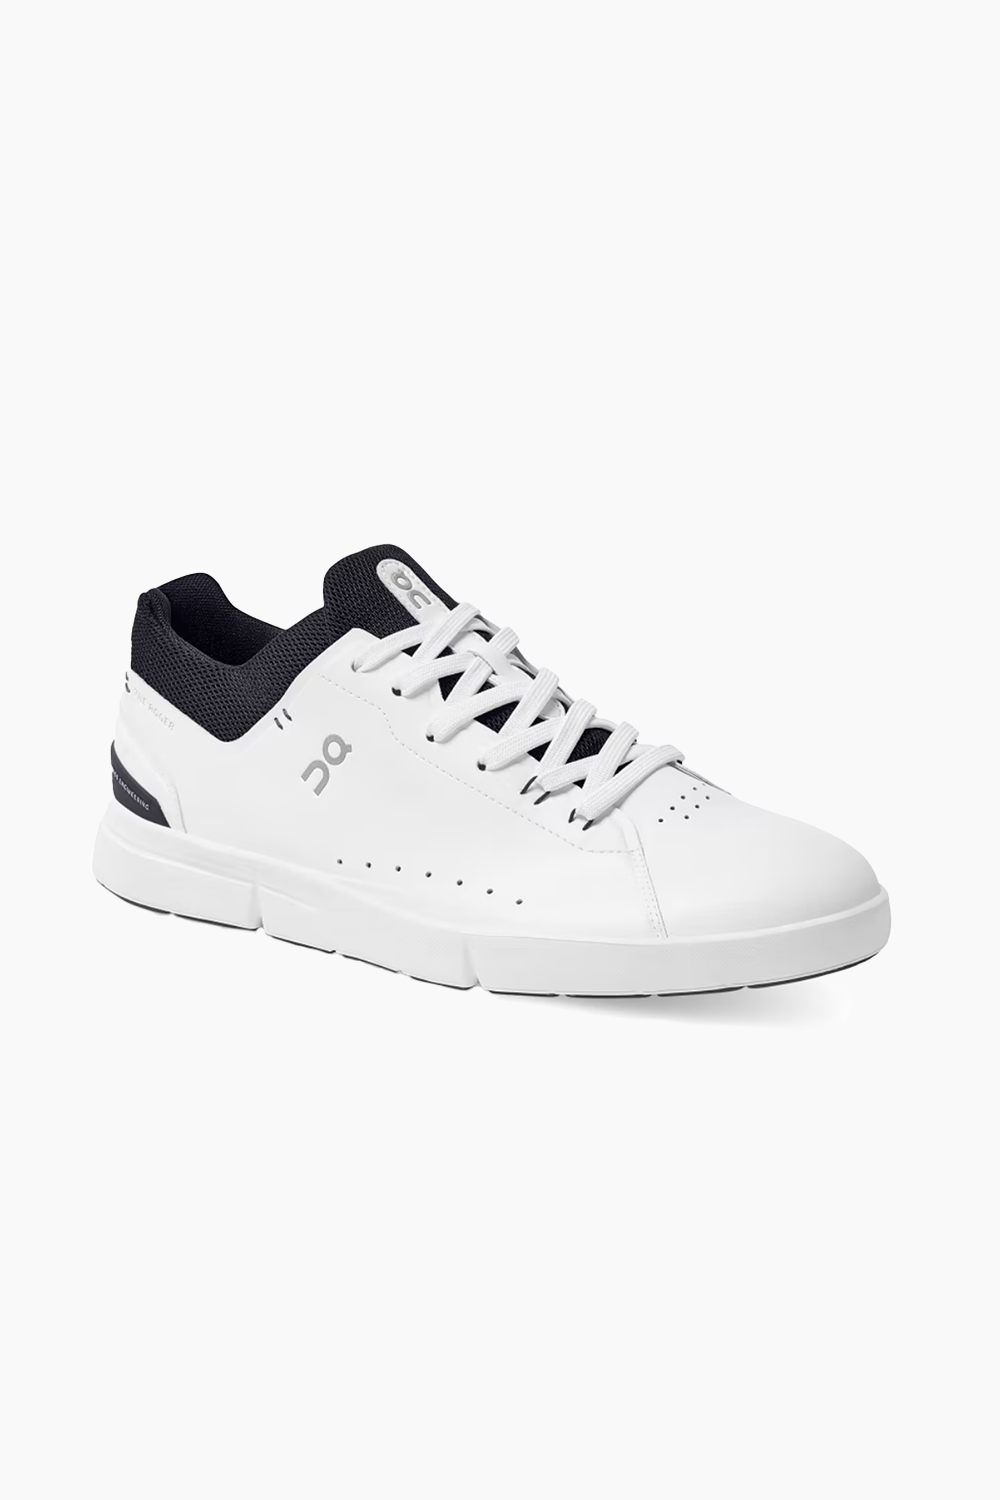 ON | Men's The Roger Advantage Sneaker in White/Midnight